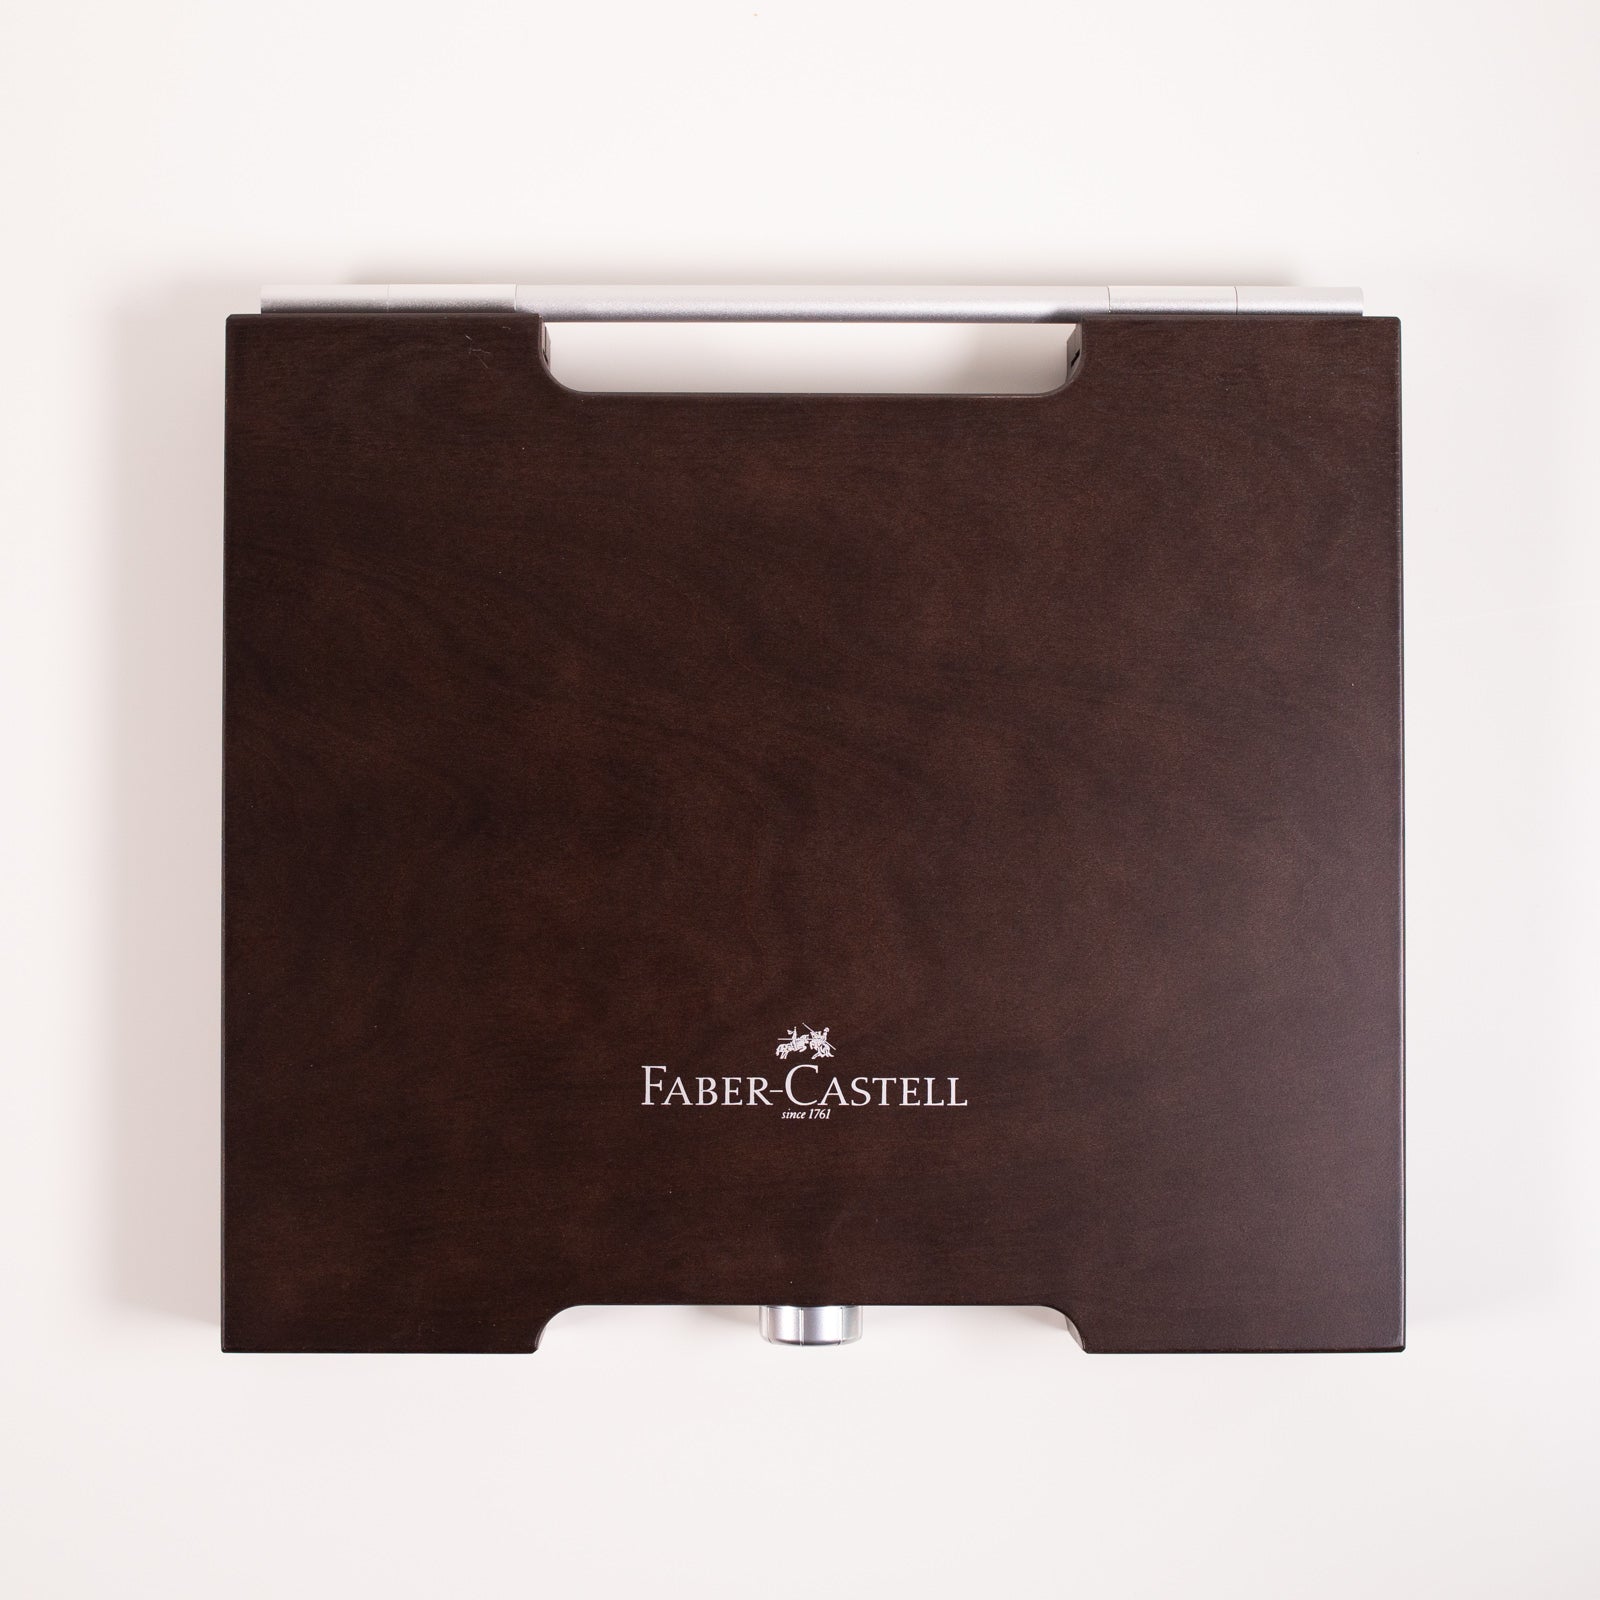 Faber Castell Polychromos set 72 – Splendith